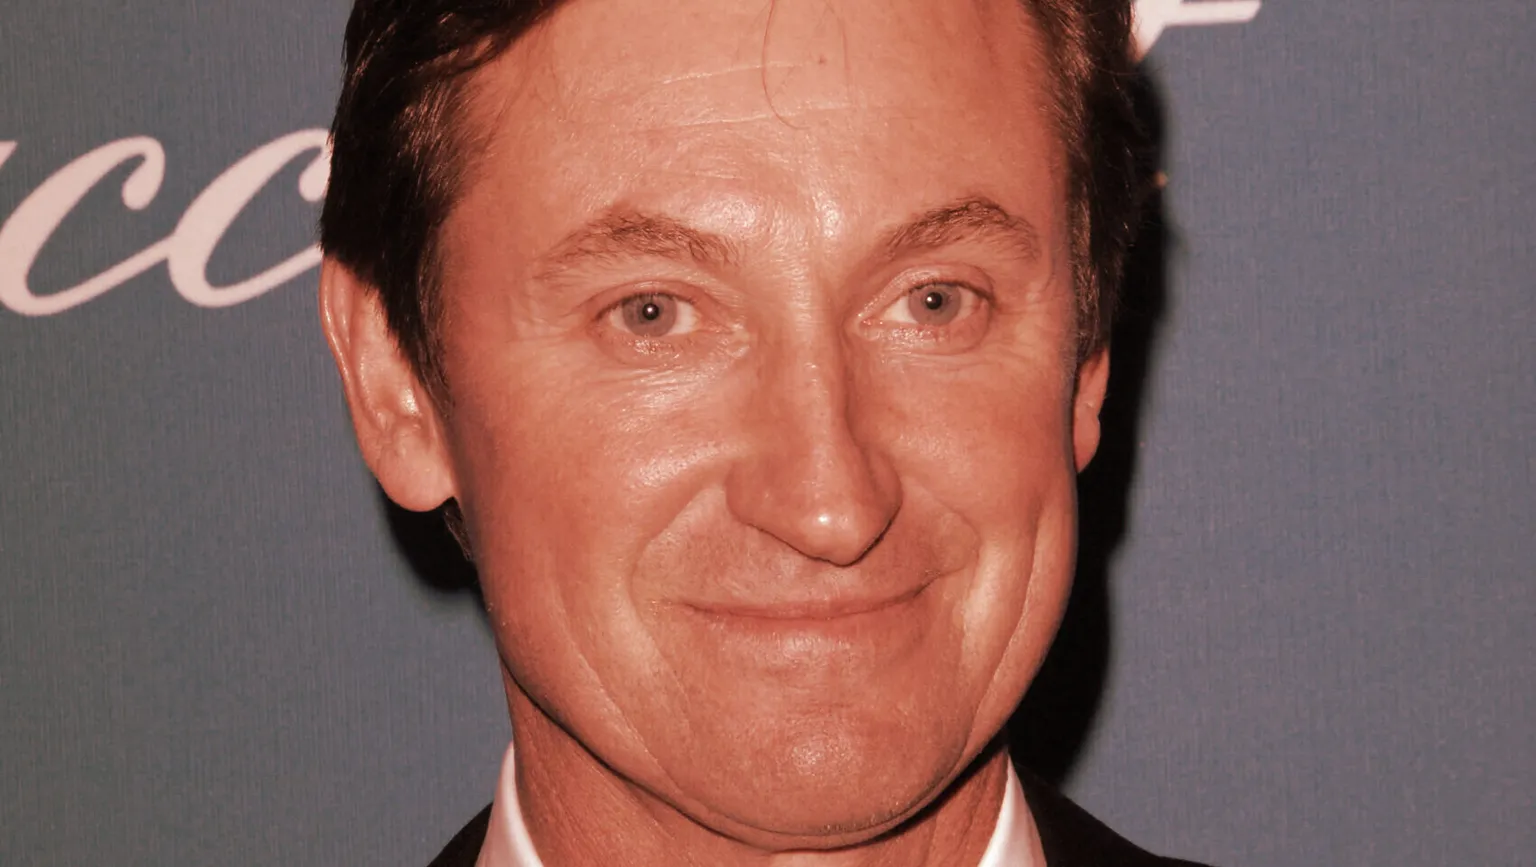 Wayne Gretzky. Image: Shutterstock